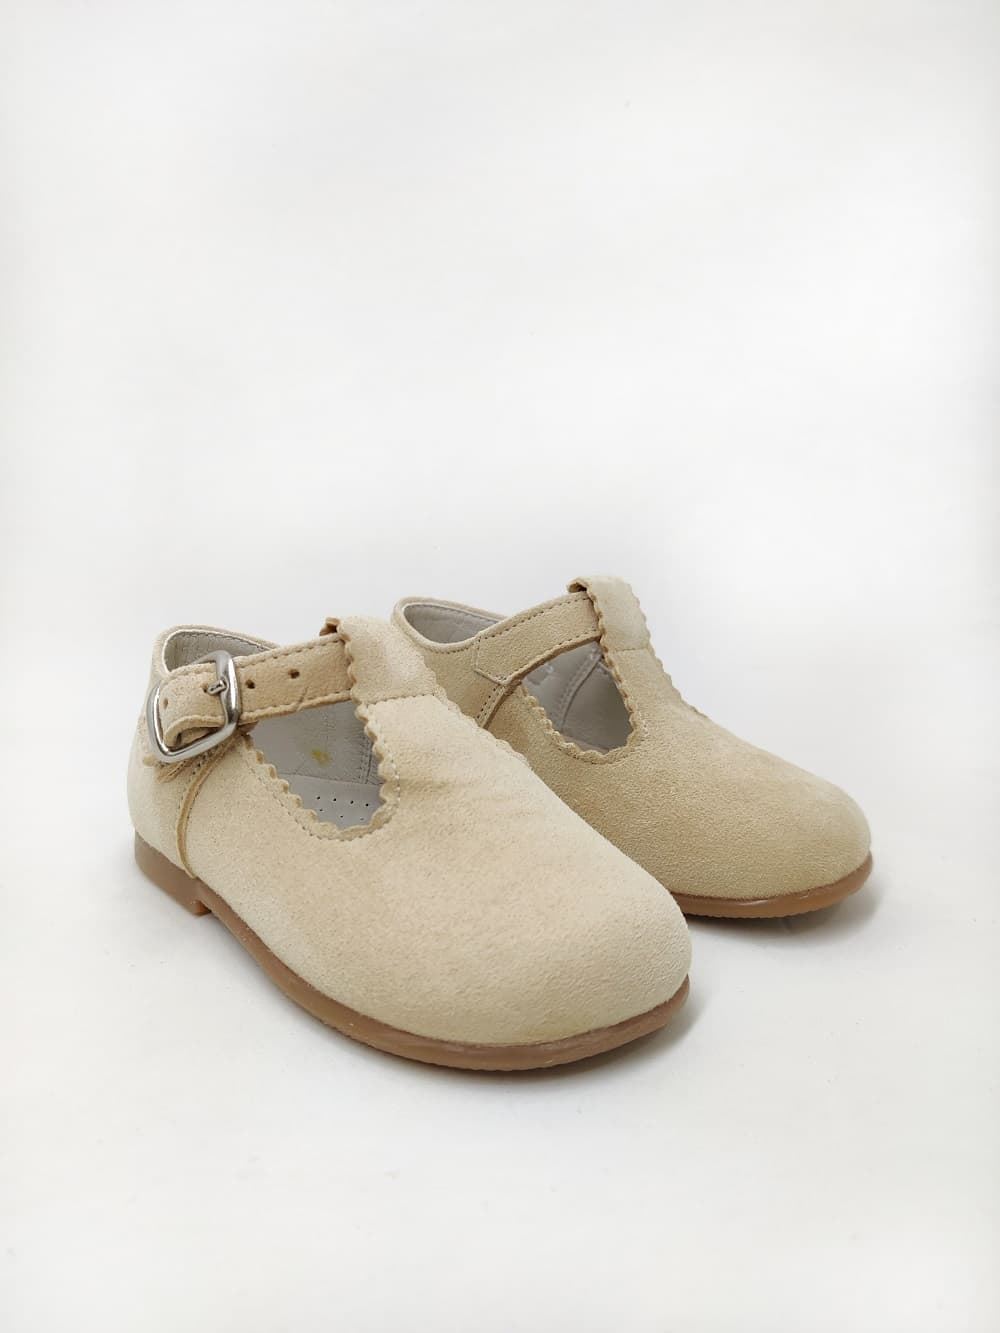 Pirufin (Piruflex) Pepito baby shoe Suede Camel - Image 1